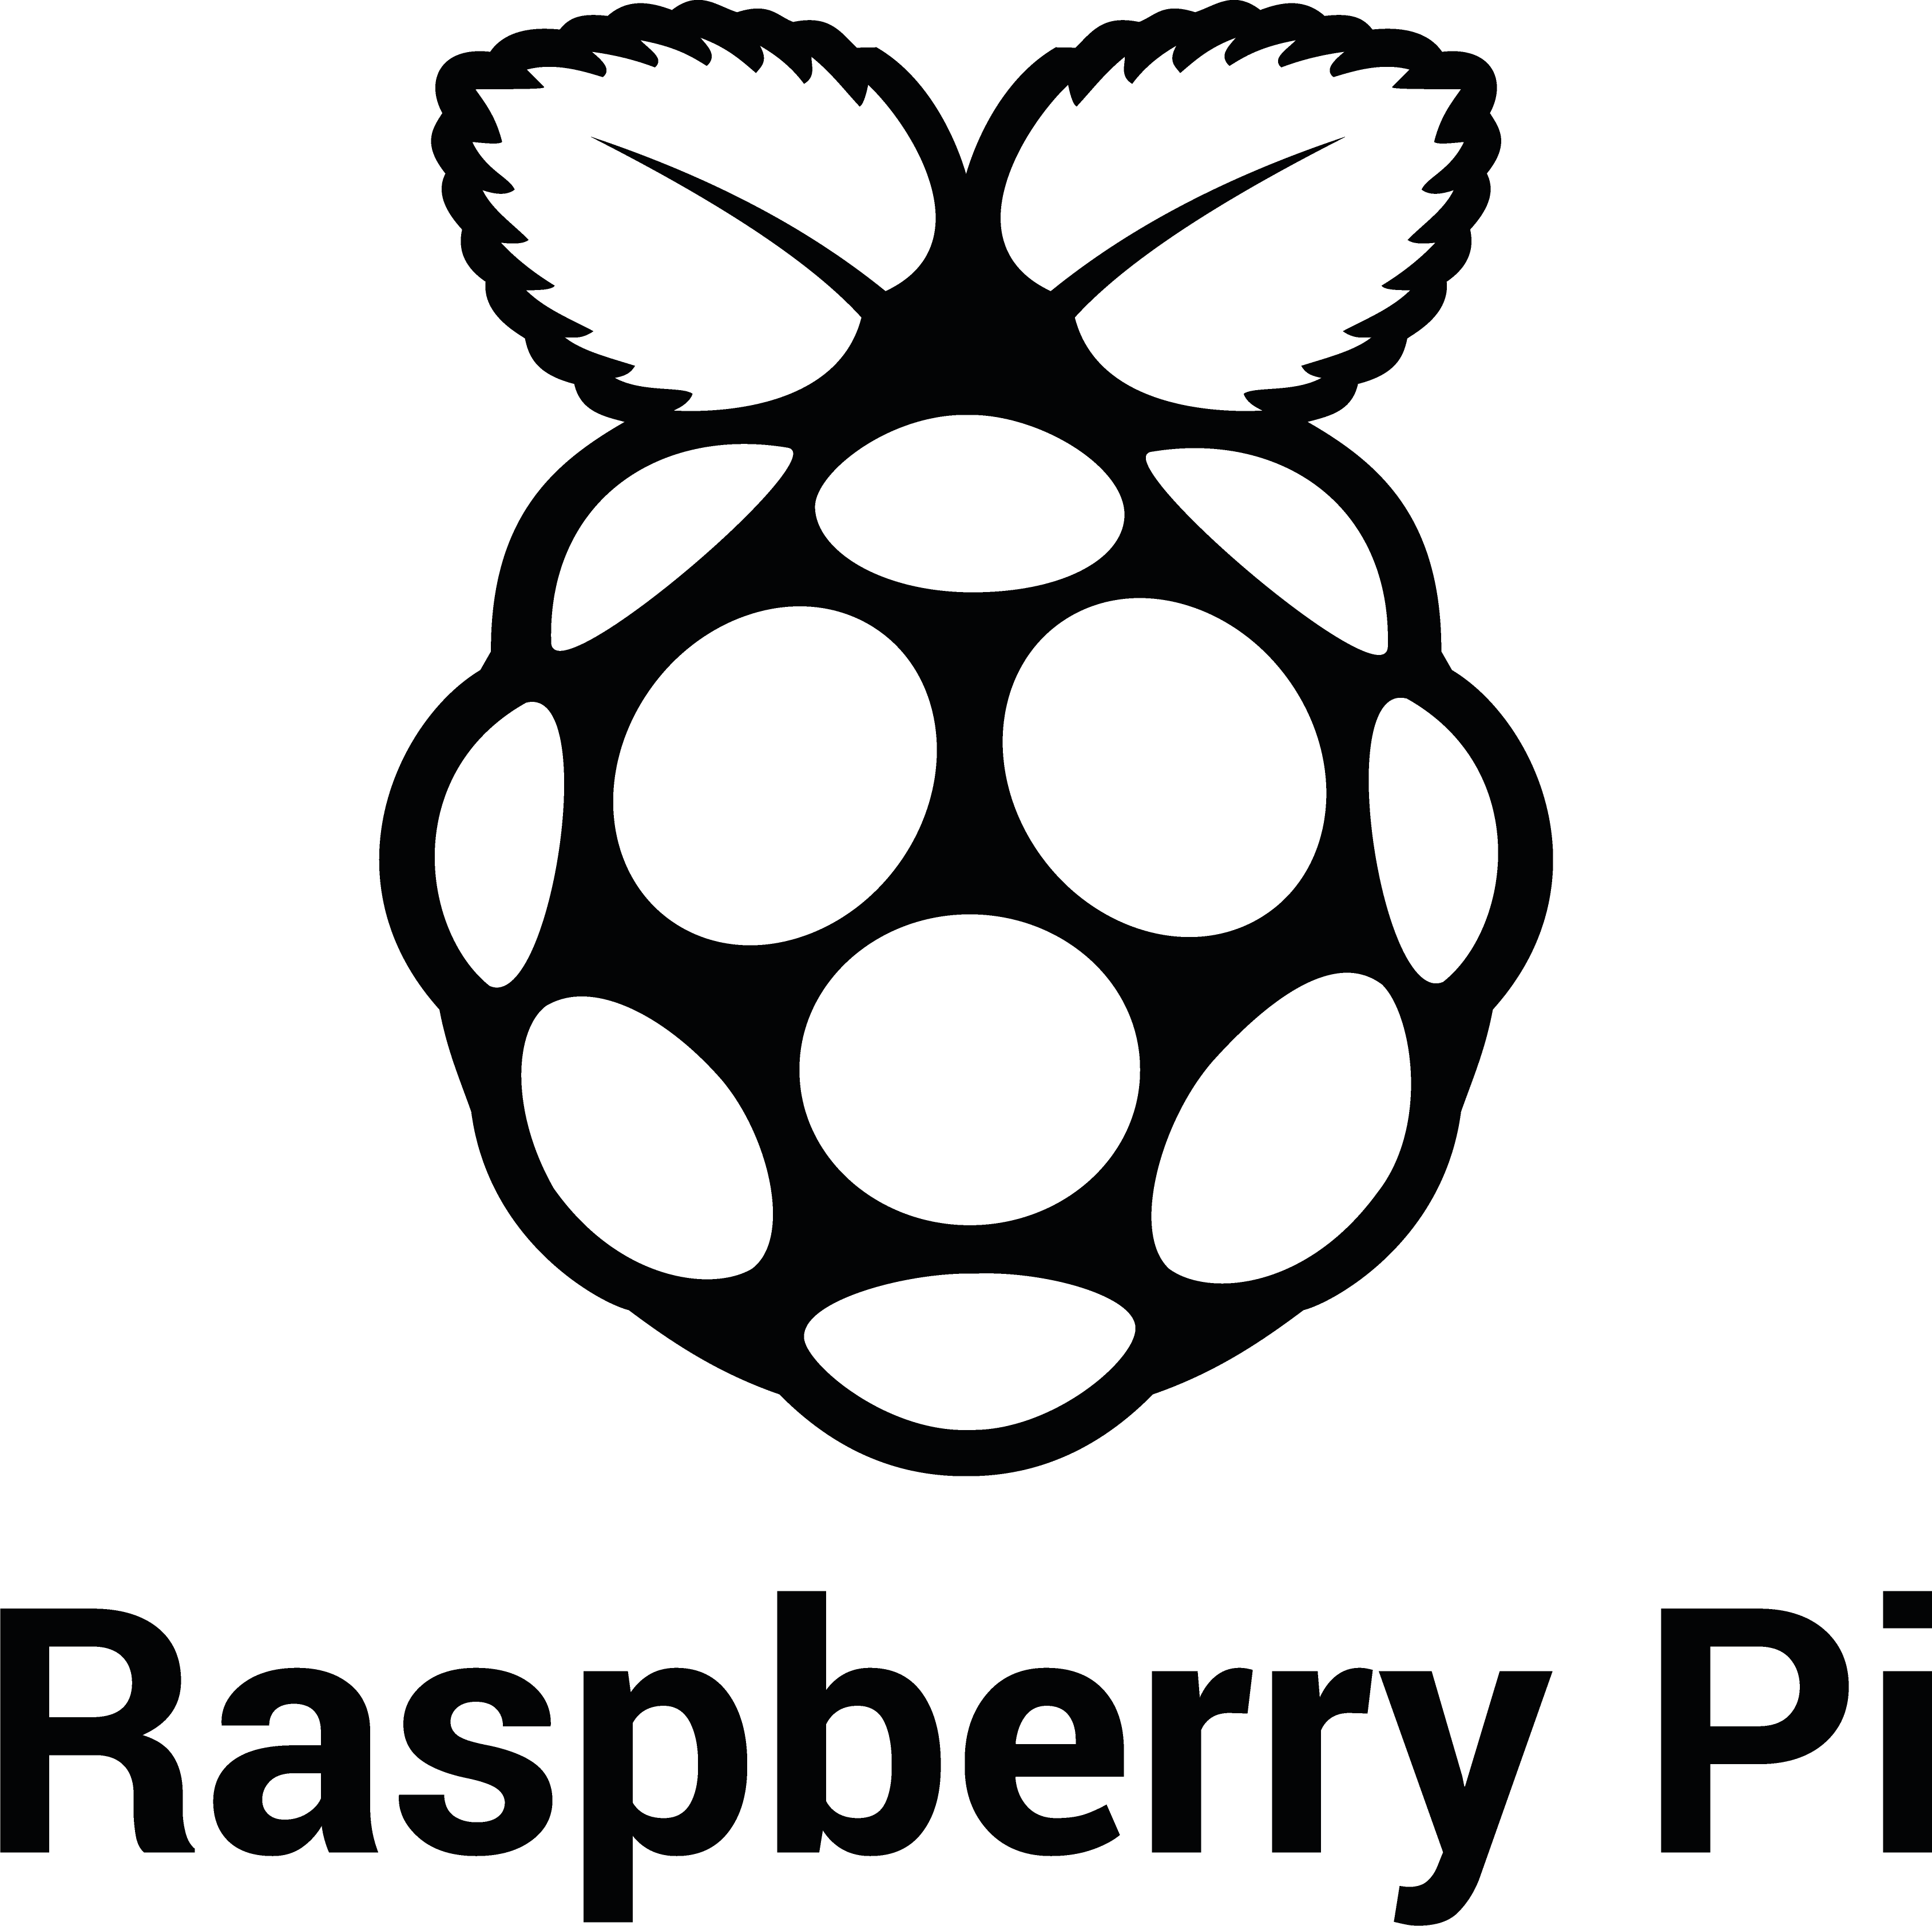 Raspberry Logo - File:RPi-Logo-Black-Stacked-PRINT.png - Wikimedia Commons